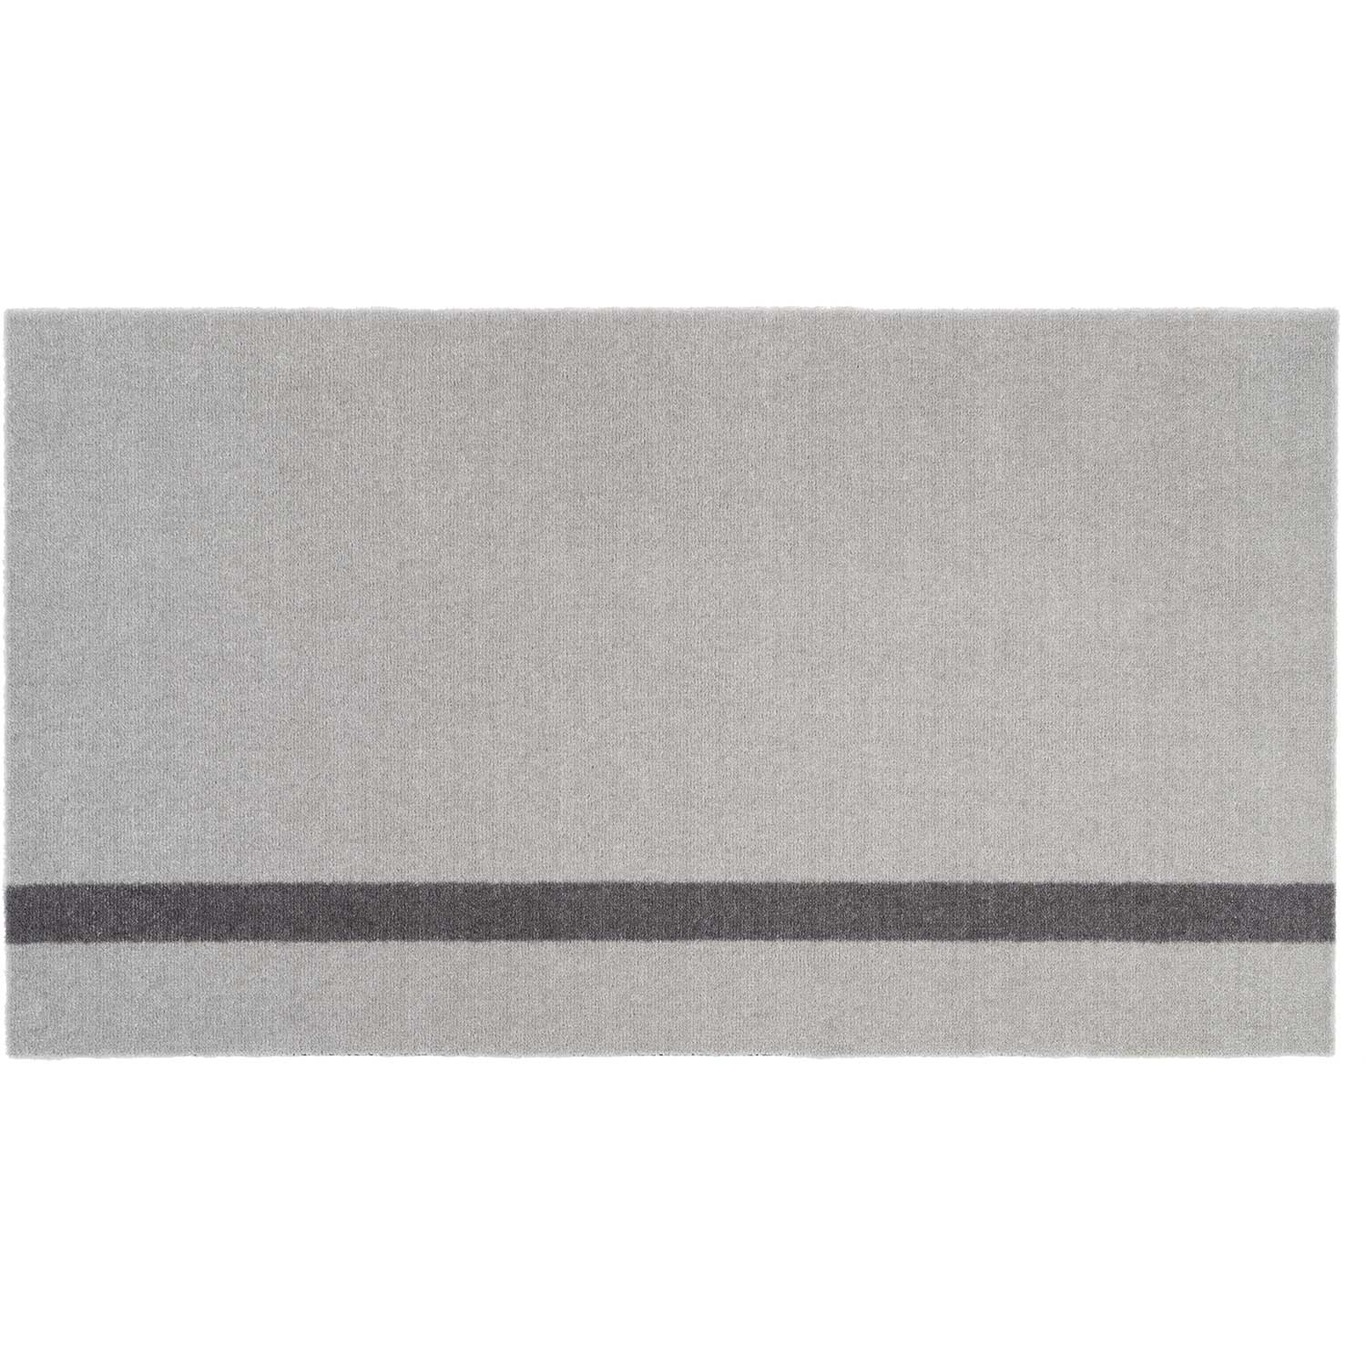 Stripes Vertikal Matto Vaaleanharmaa / Steel Grey, 67x120 cm